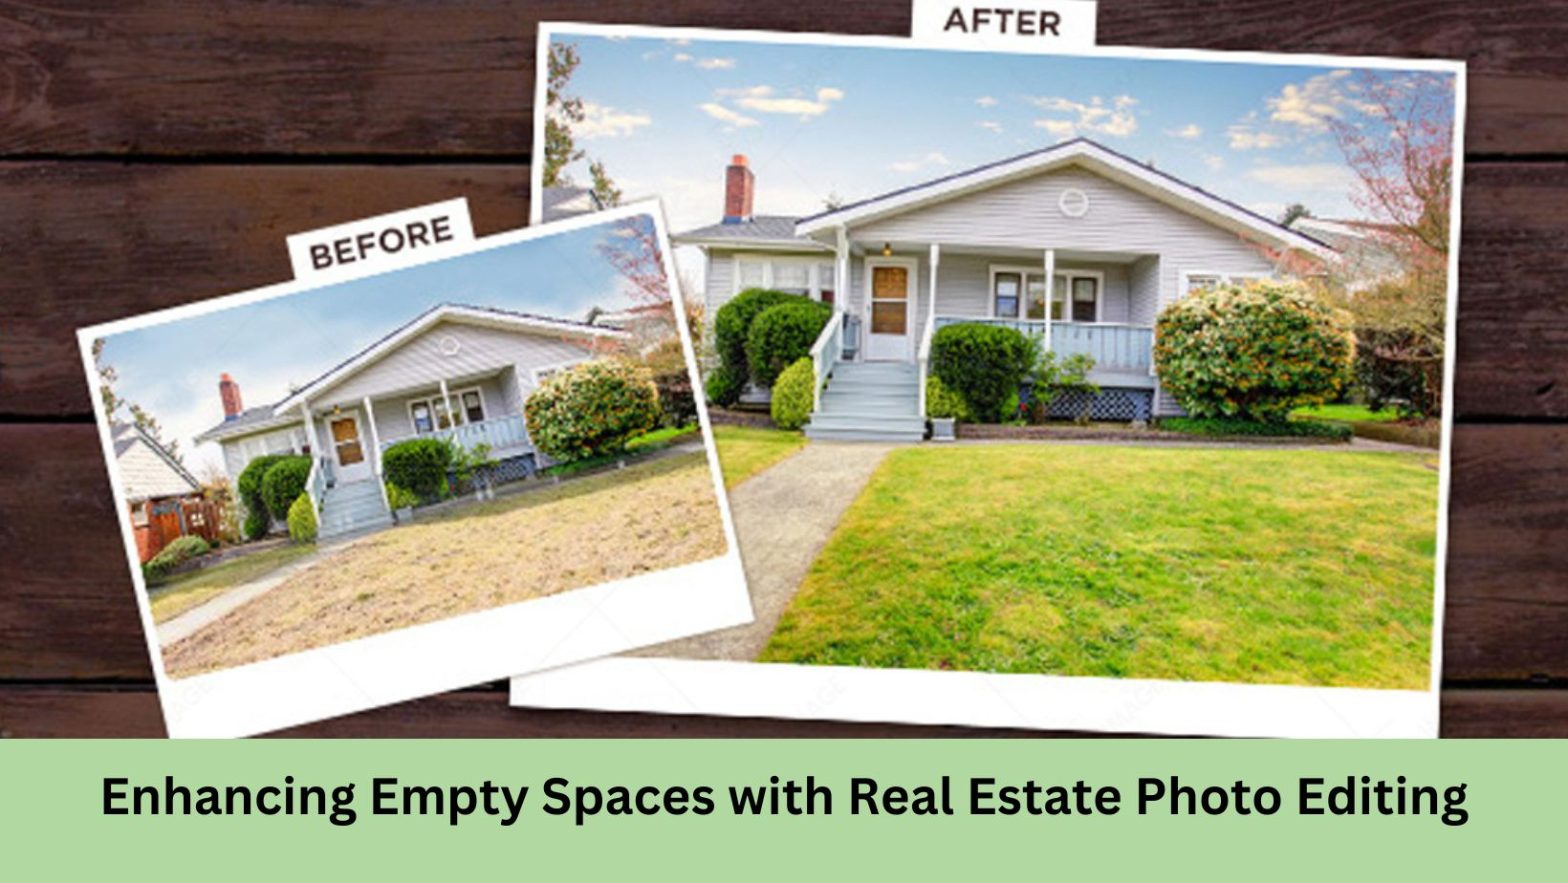 Real Estate Photo Editing Service